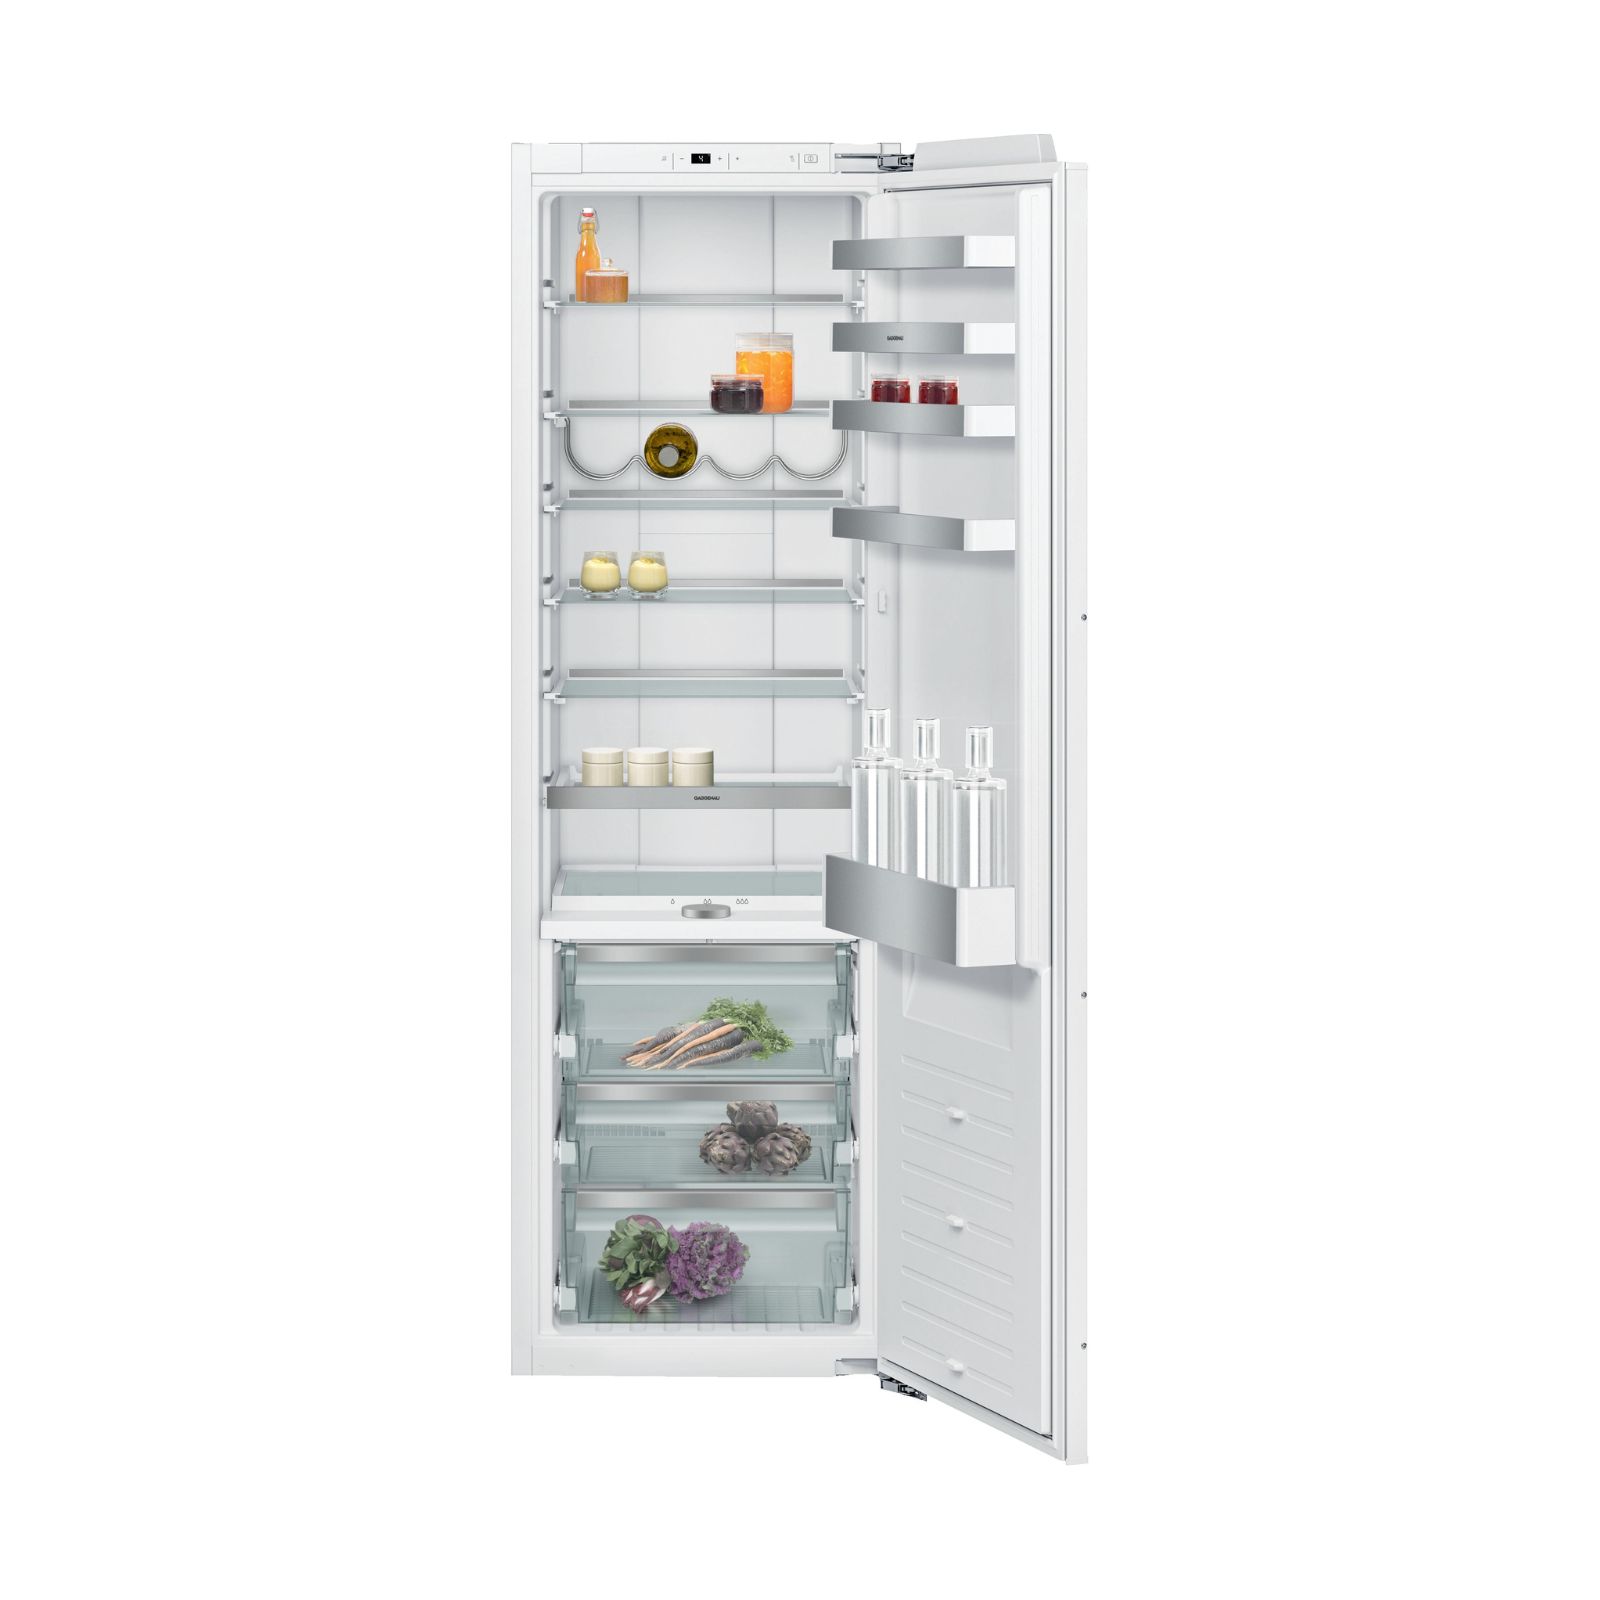 Kylskåp S200 med tre klimatzoner